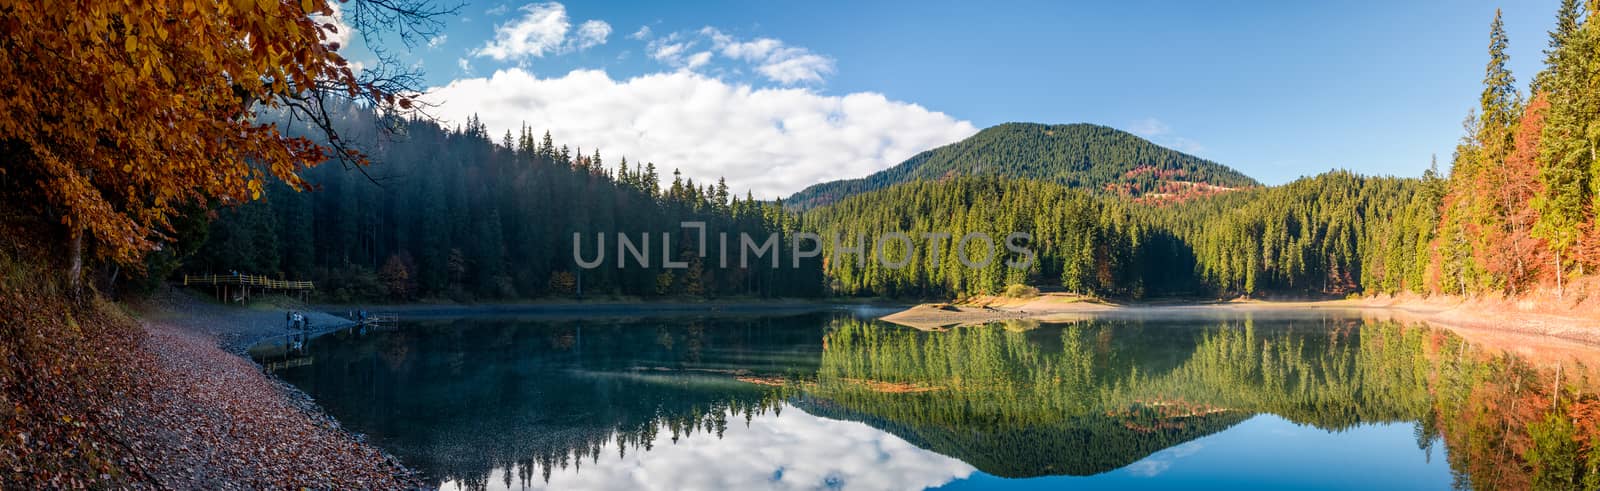 stunning panorama of mountain lake in autumn by Pellinni